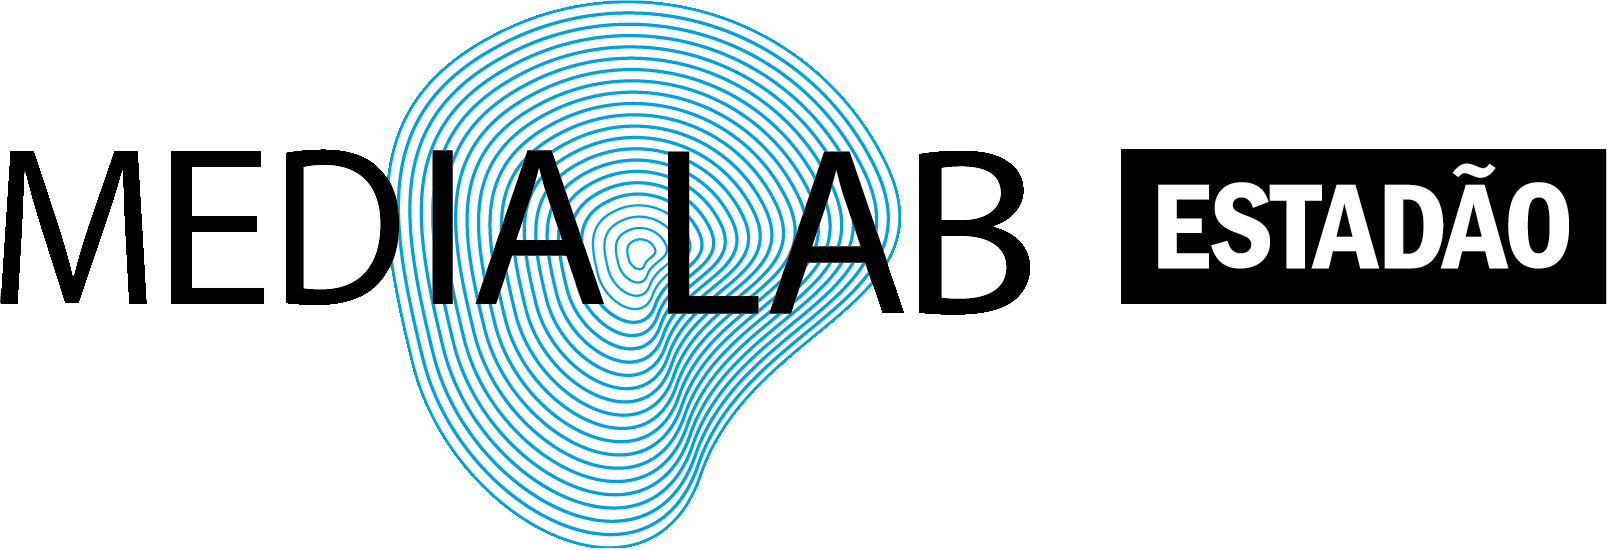 logotipo medialab